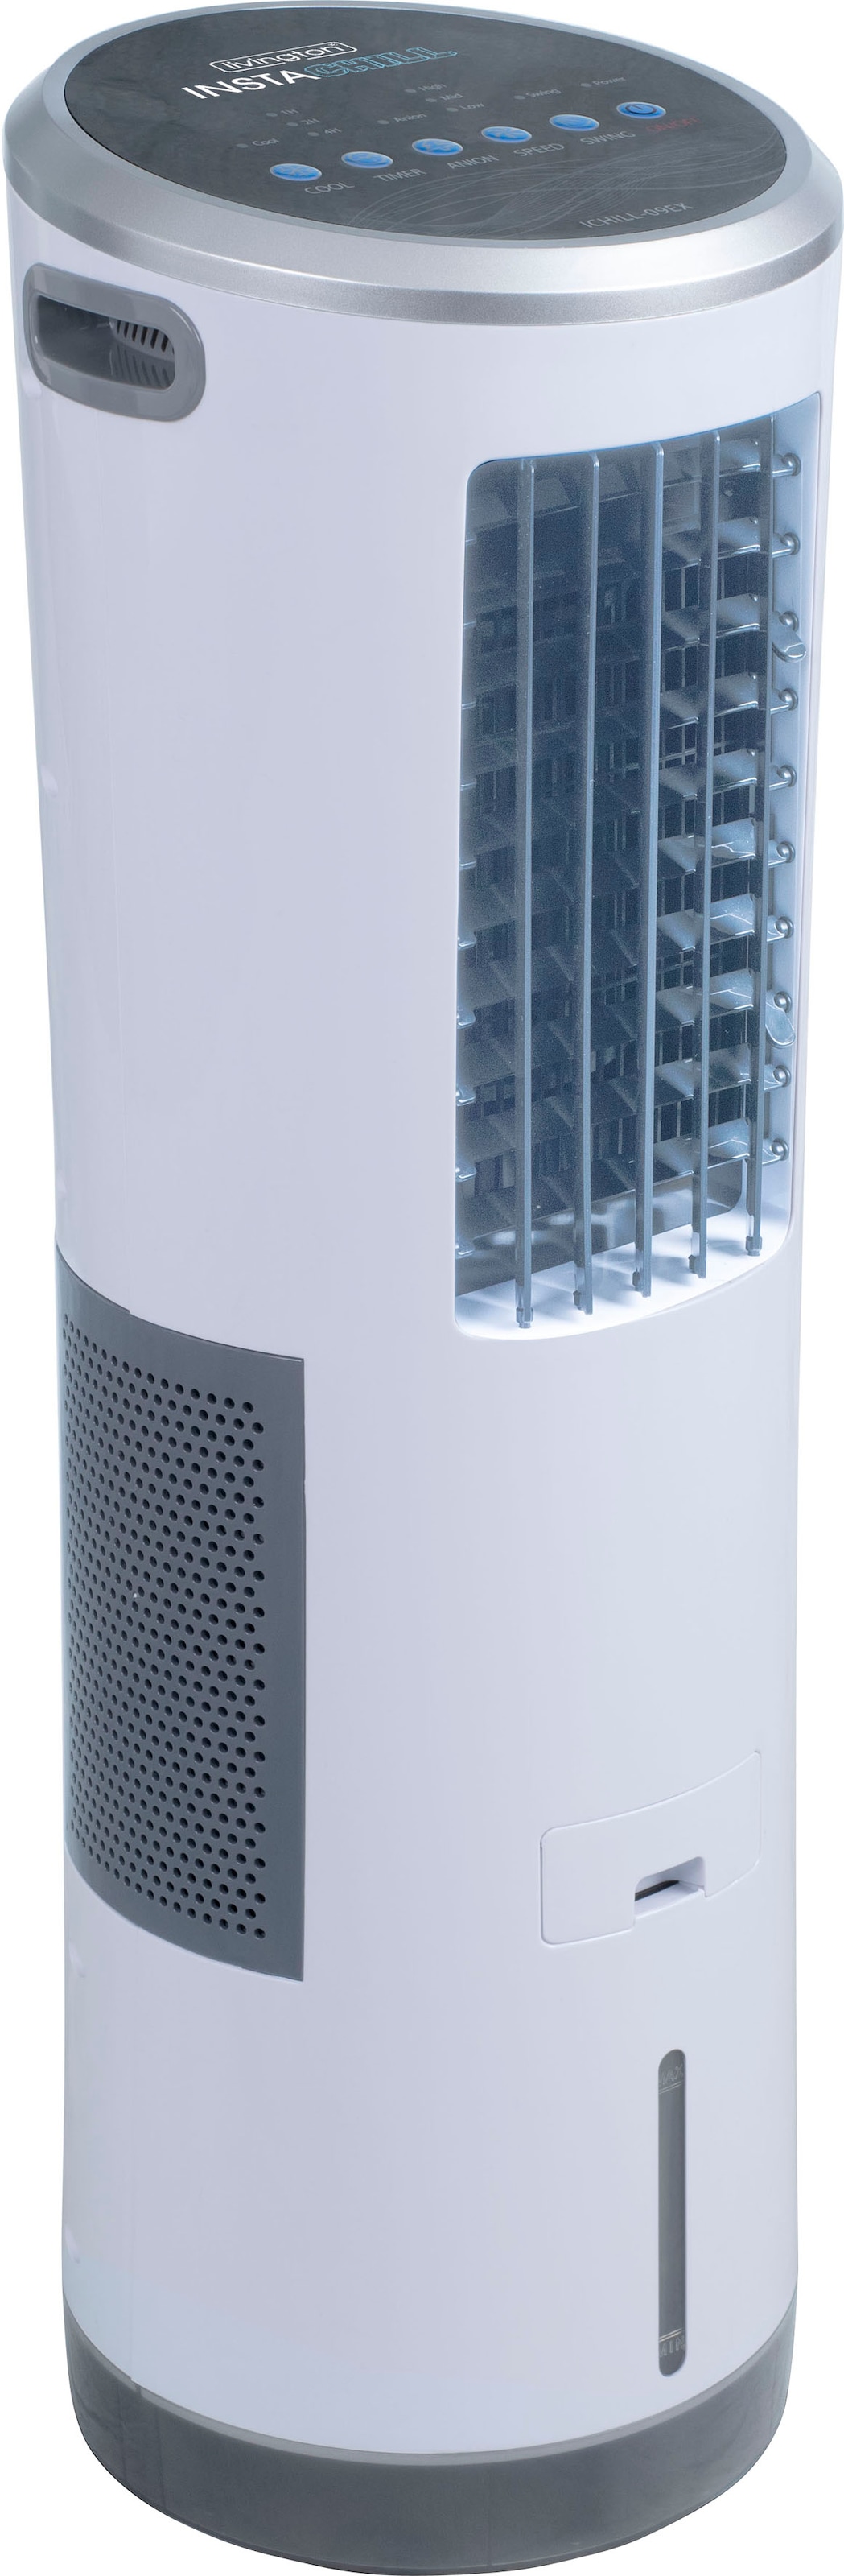 Ventilatorkombigerät »InstaChill«, Luftkühler, 8,5 l Fassungsvermögen